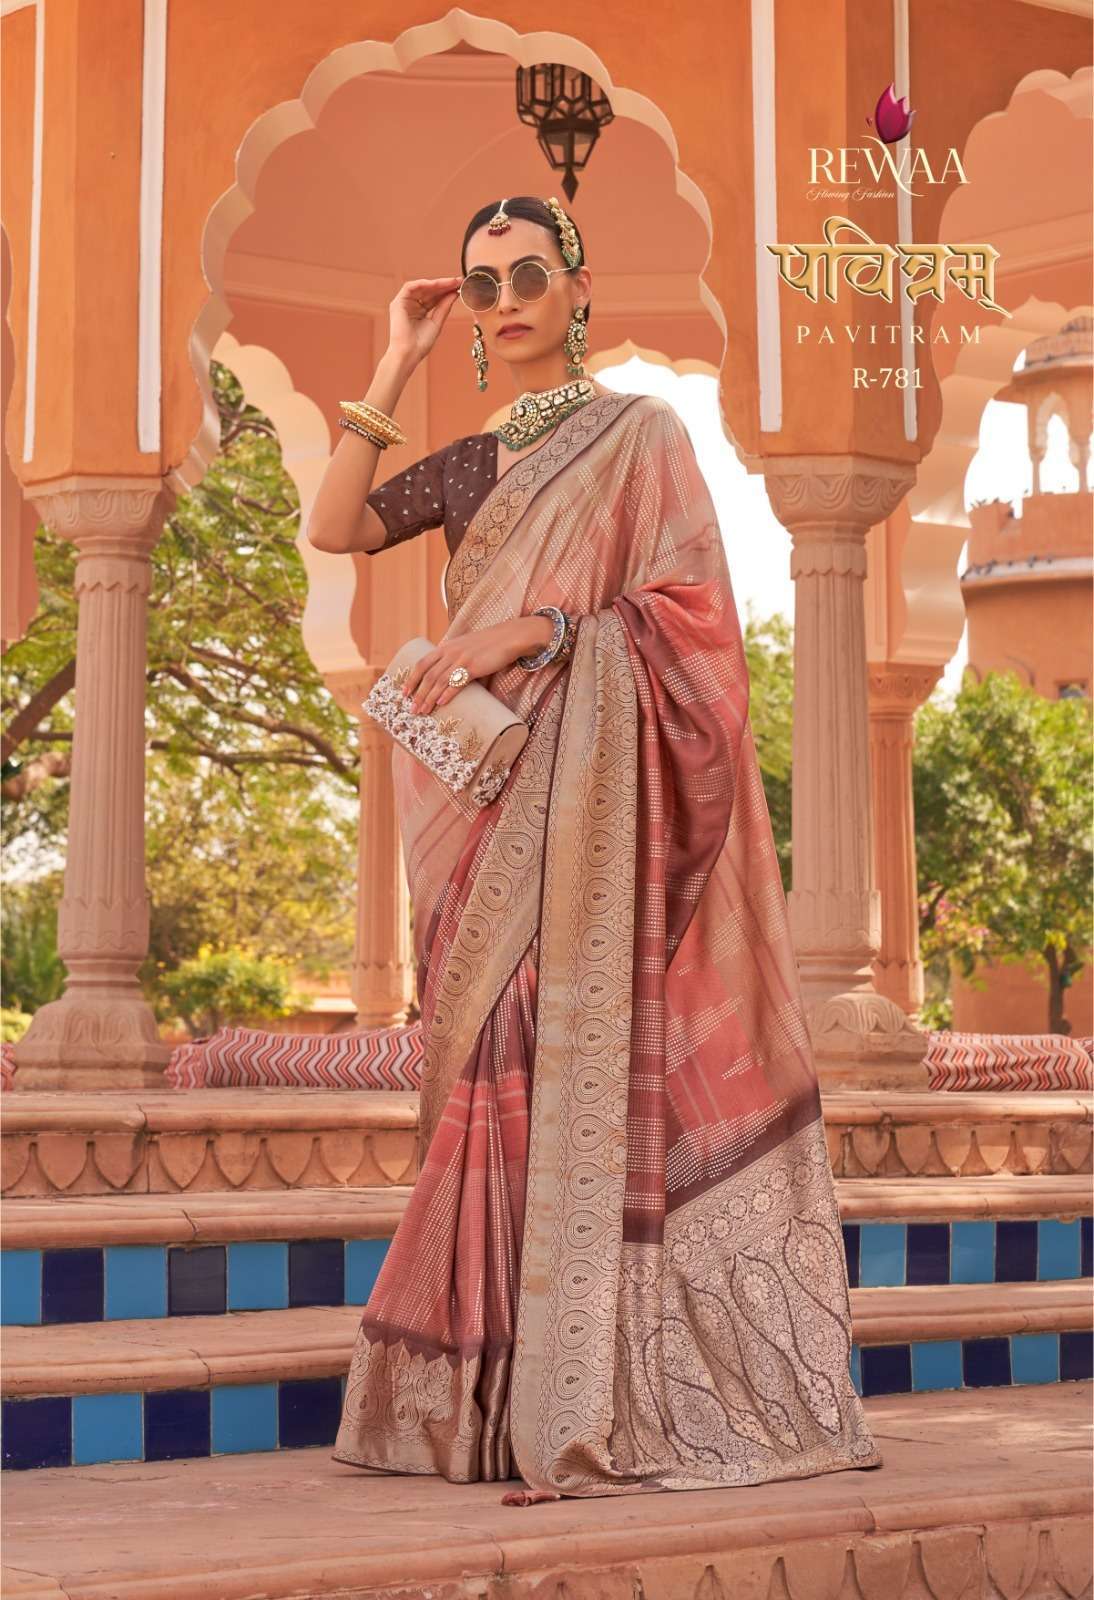 Rewaa Fashion Pavitram Silk with digital Flower Printed fanc...